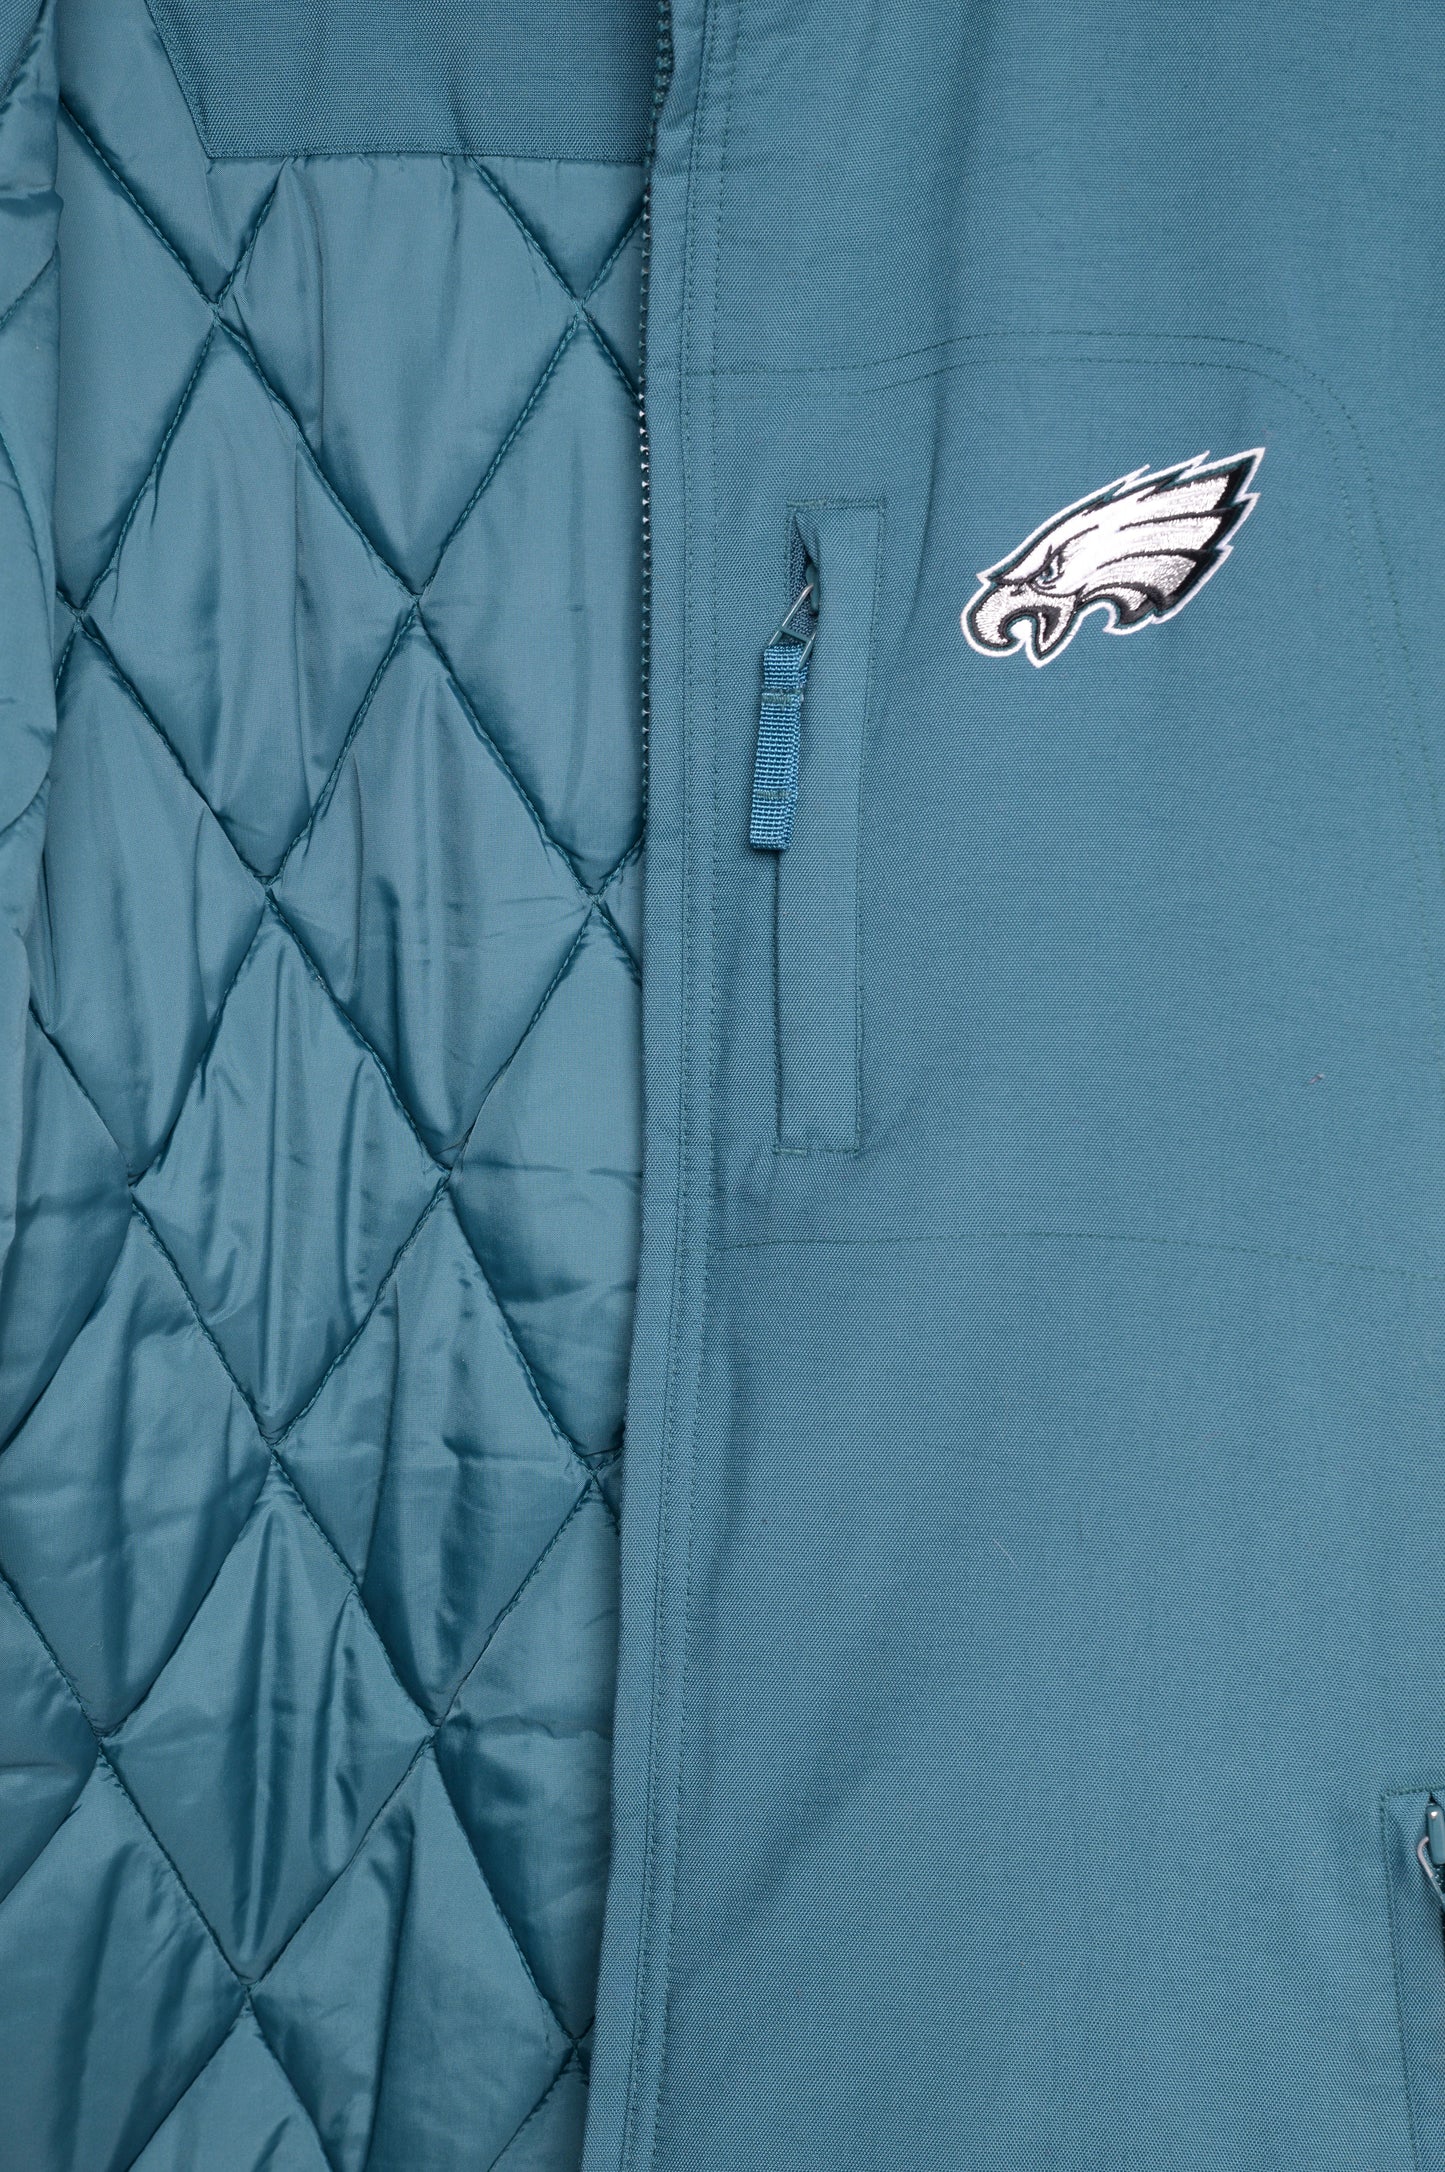 Philadelphia Eagles Puffer Jacket